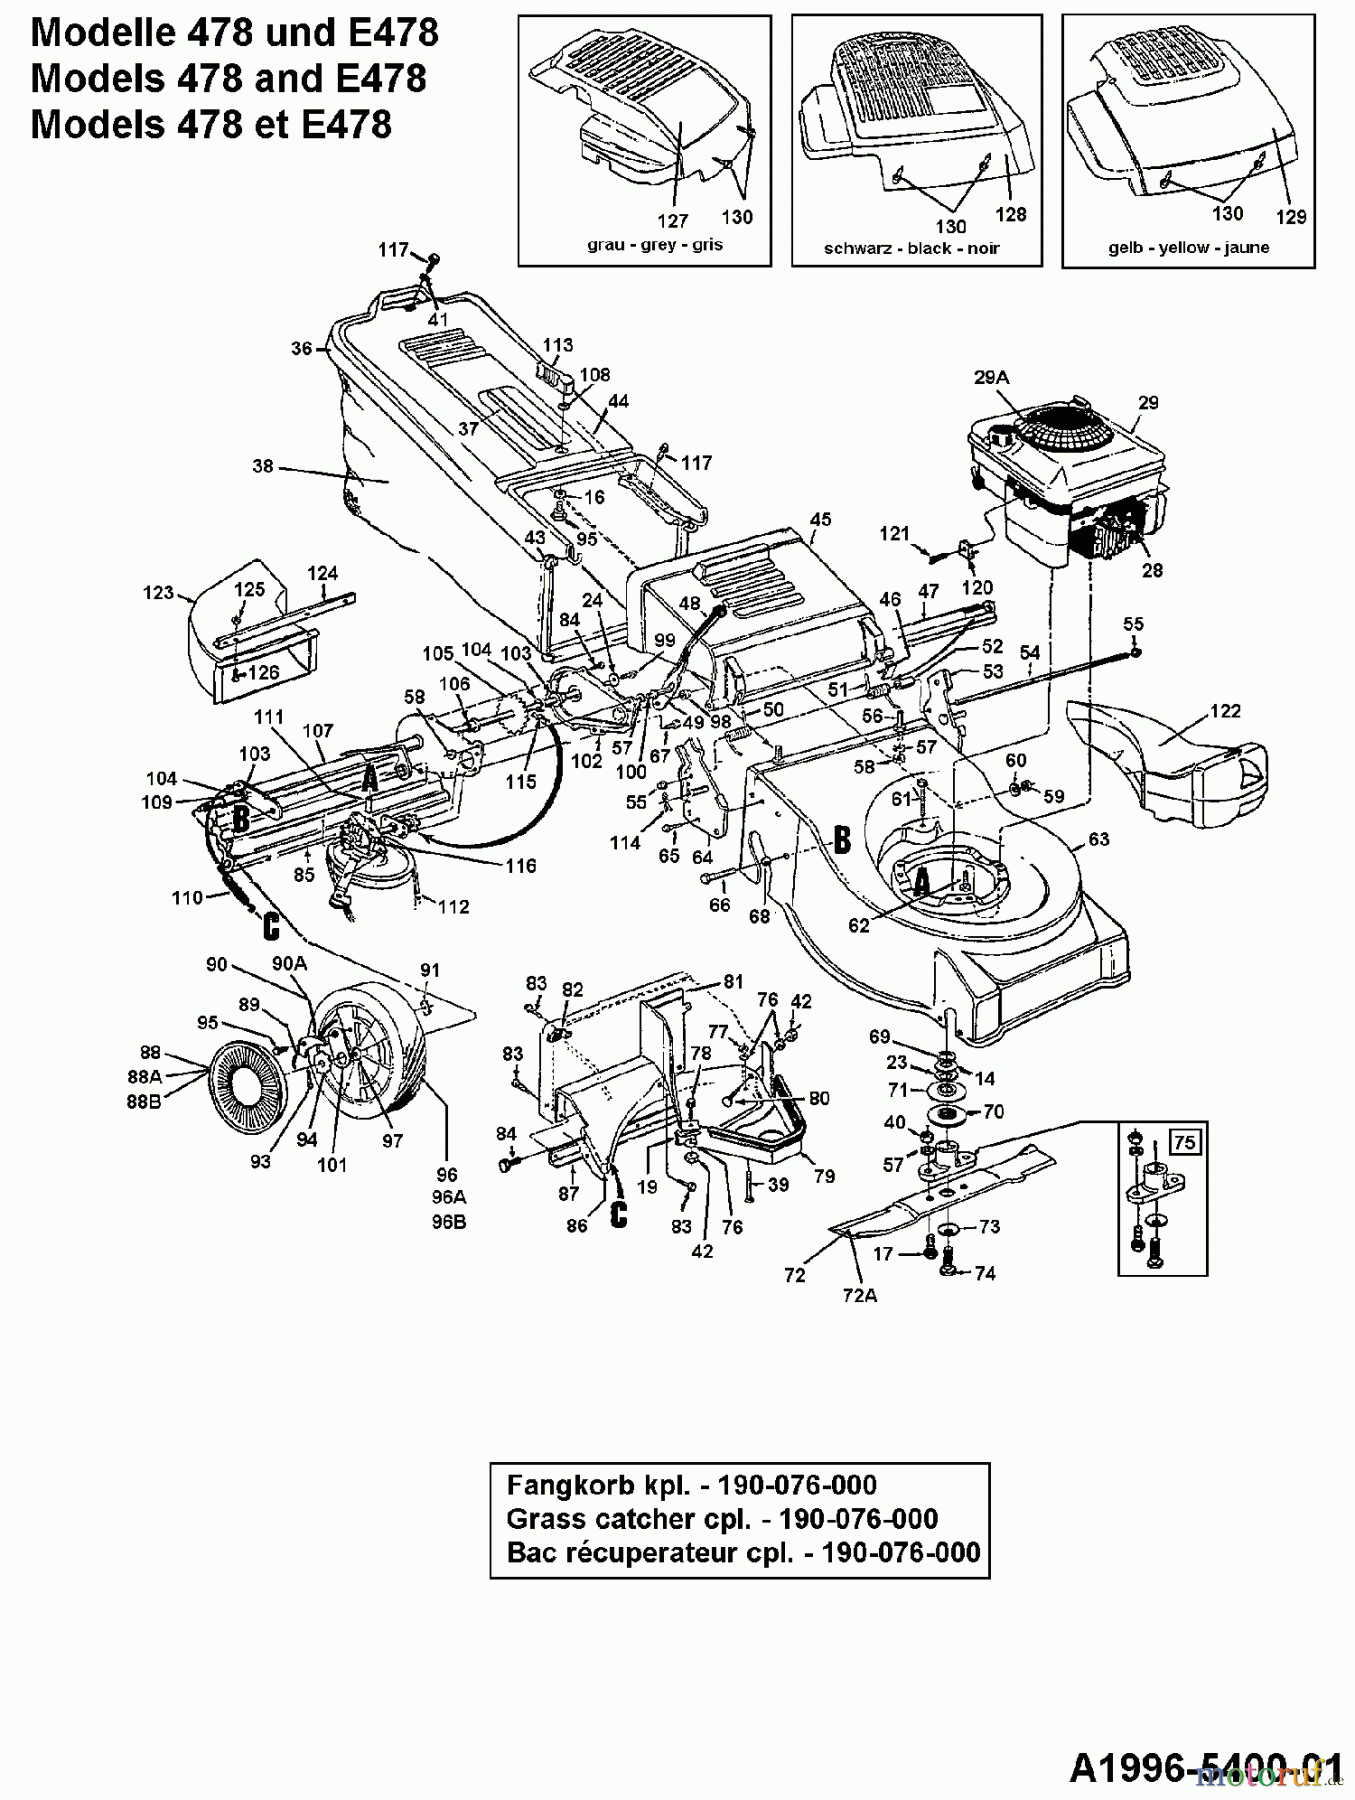  Gutbrod Motormäher mit Antrieb HB 53 RL 126-648L604  (1996) Grundgerät